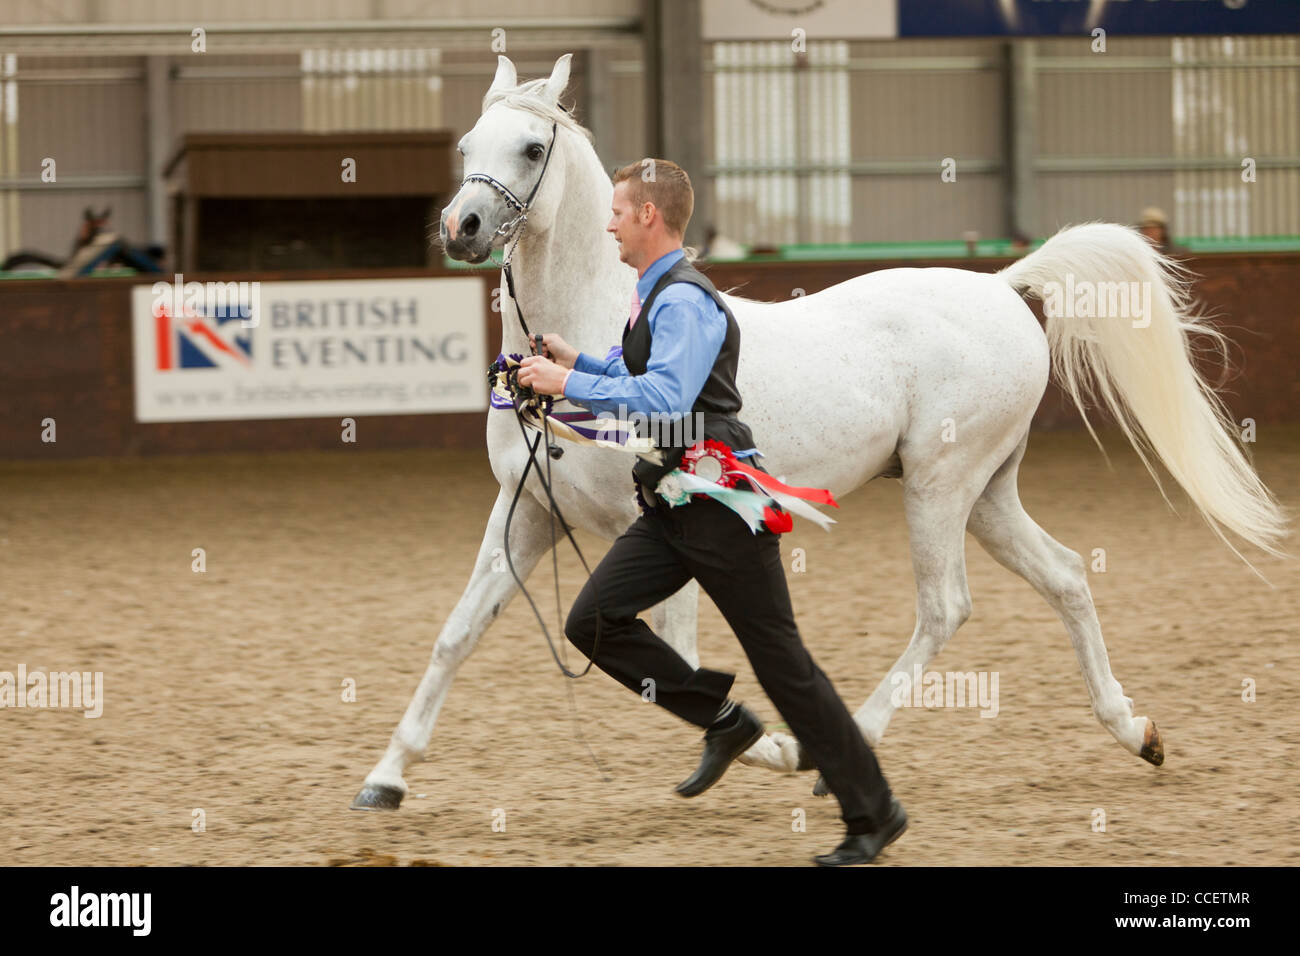 Arab stallion in-hand at SRGAHS Annual Show Stock Photo